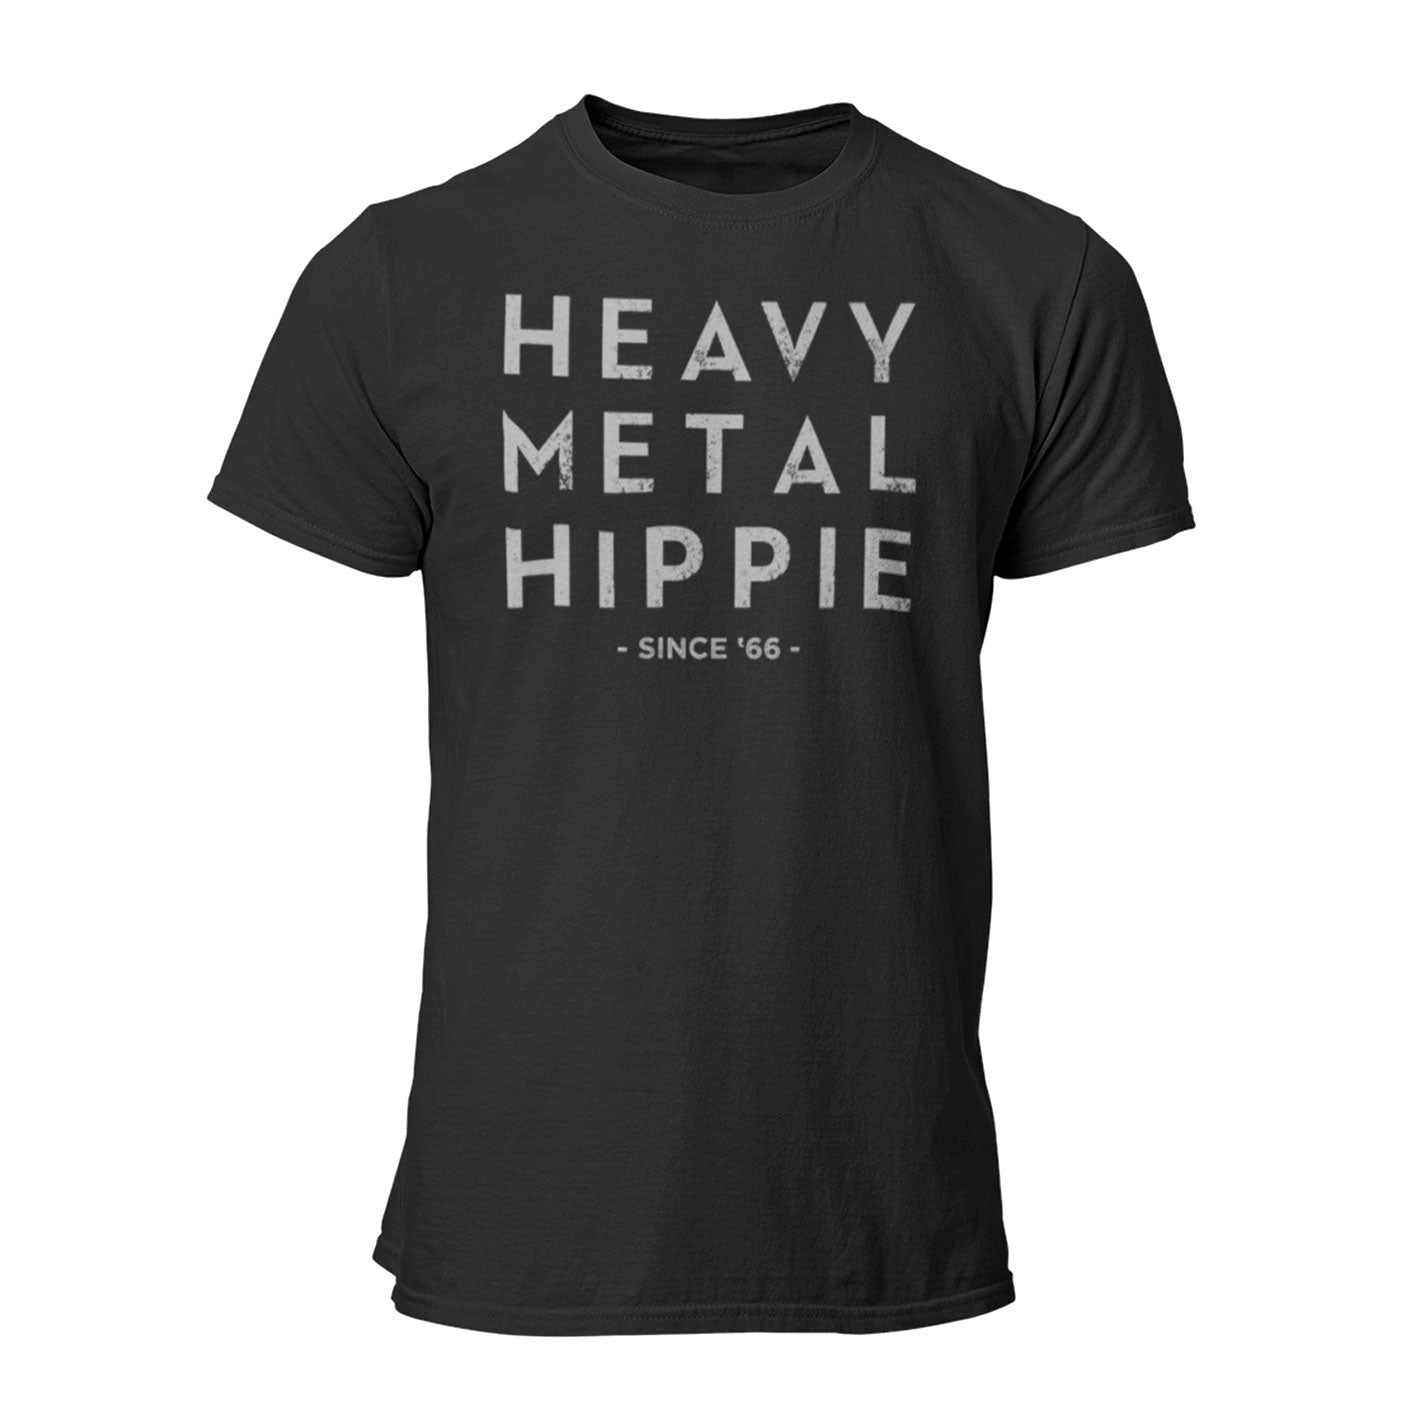 "HEAVY METAL HIPPIE" Unisex